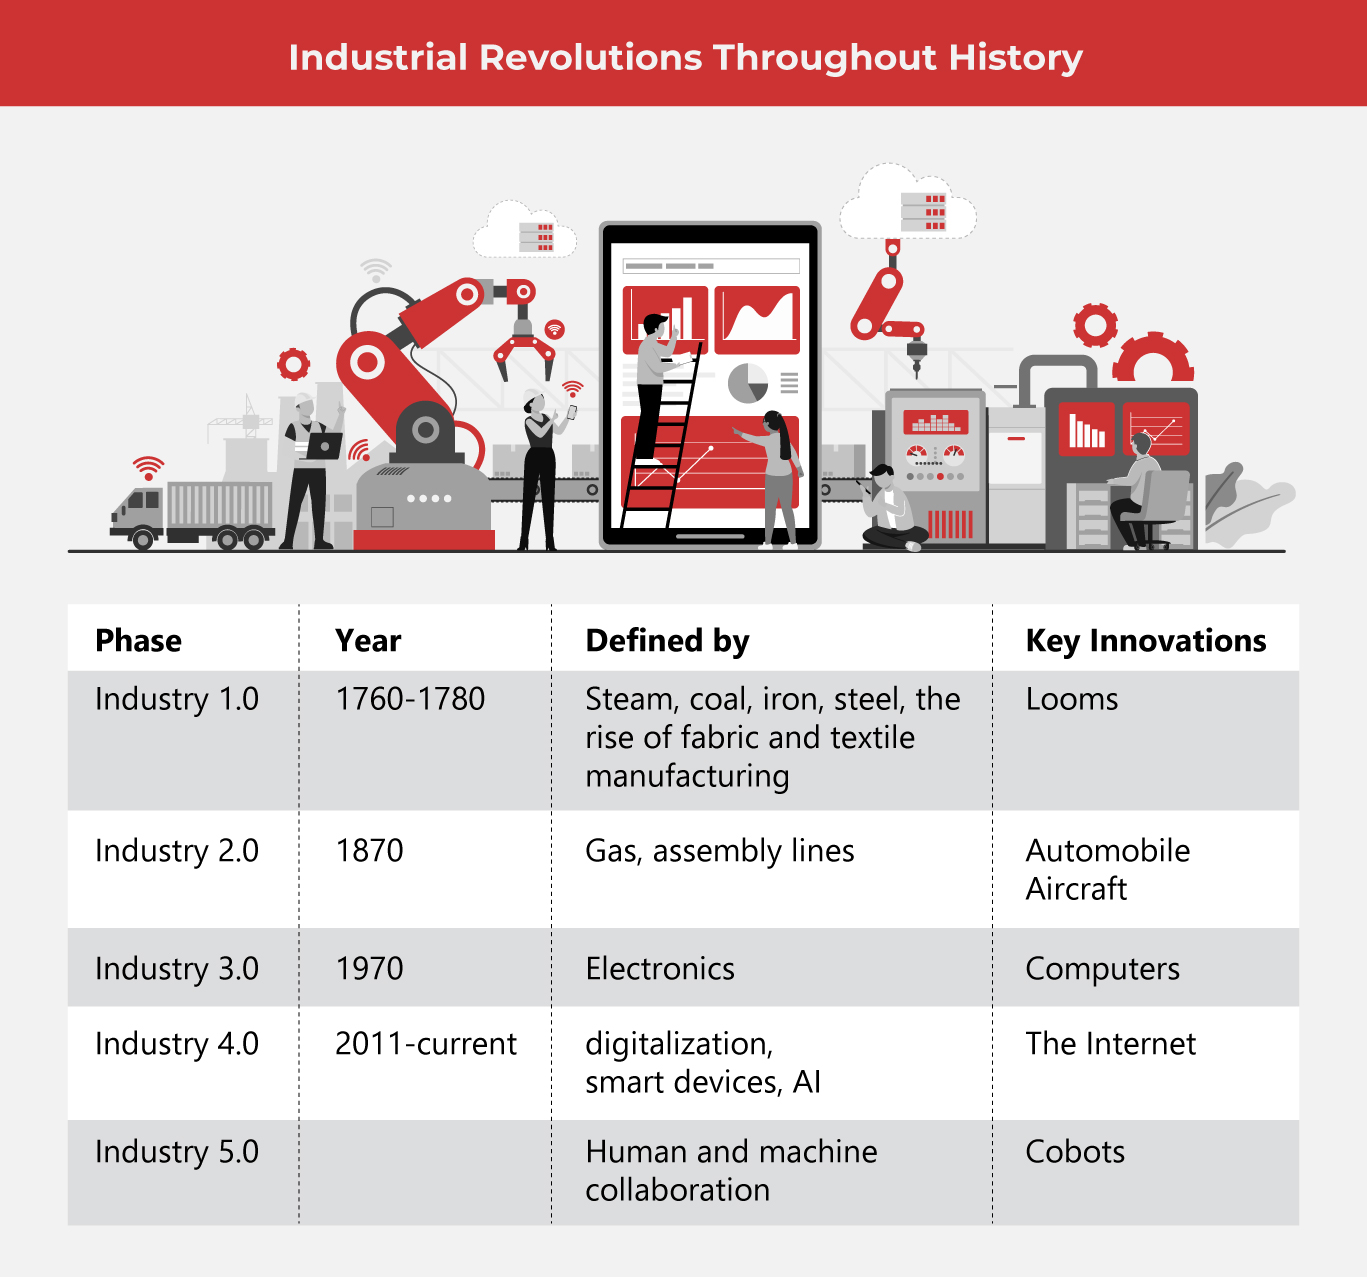 Entering Industry 5.0